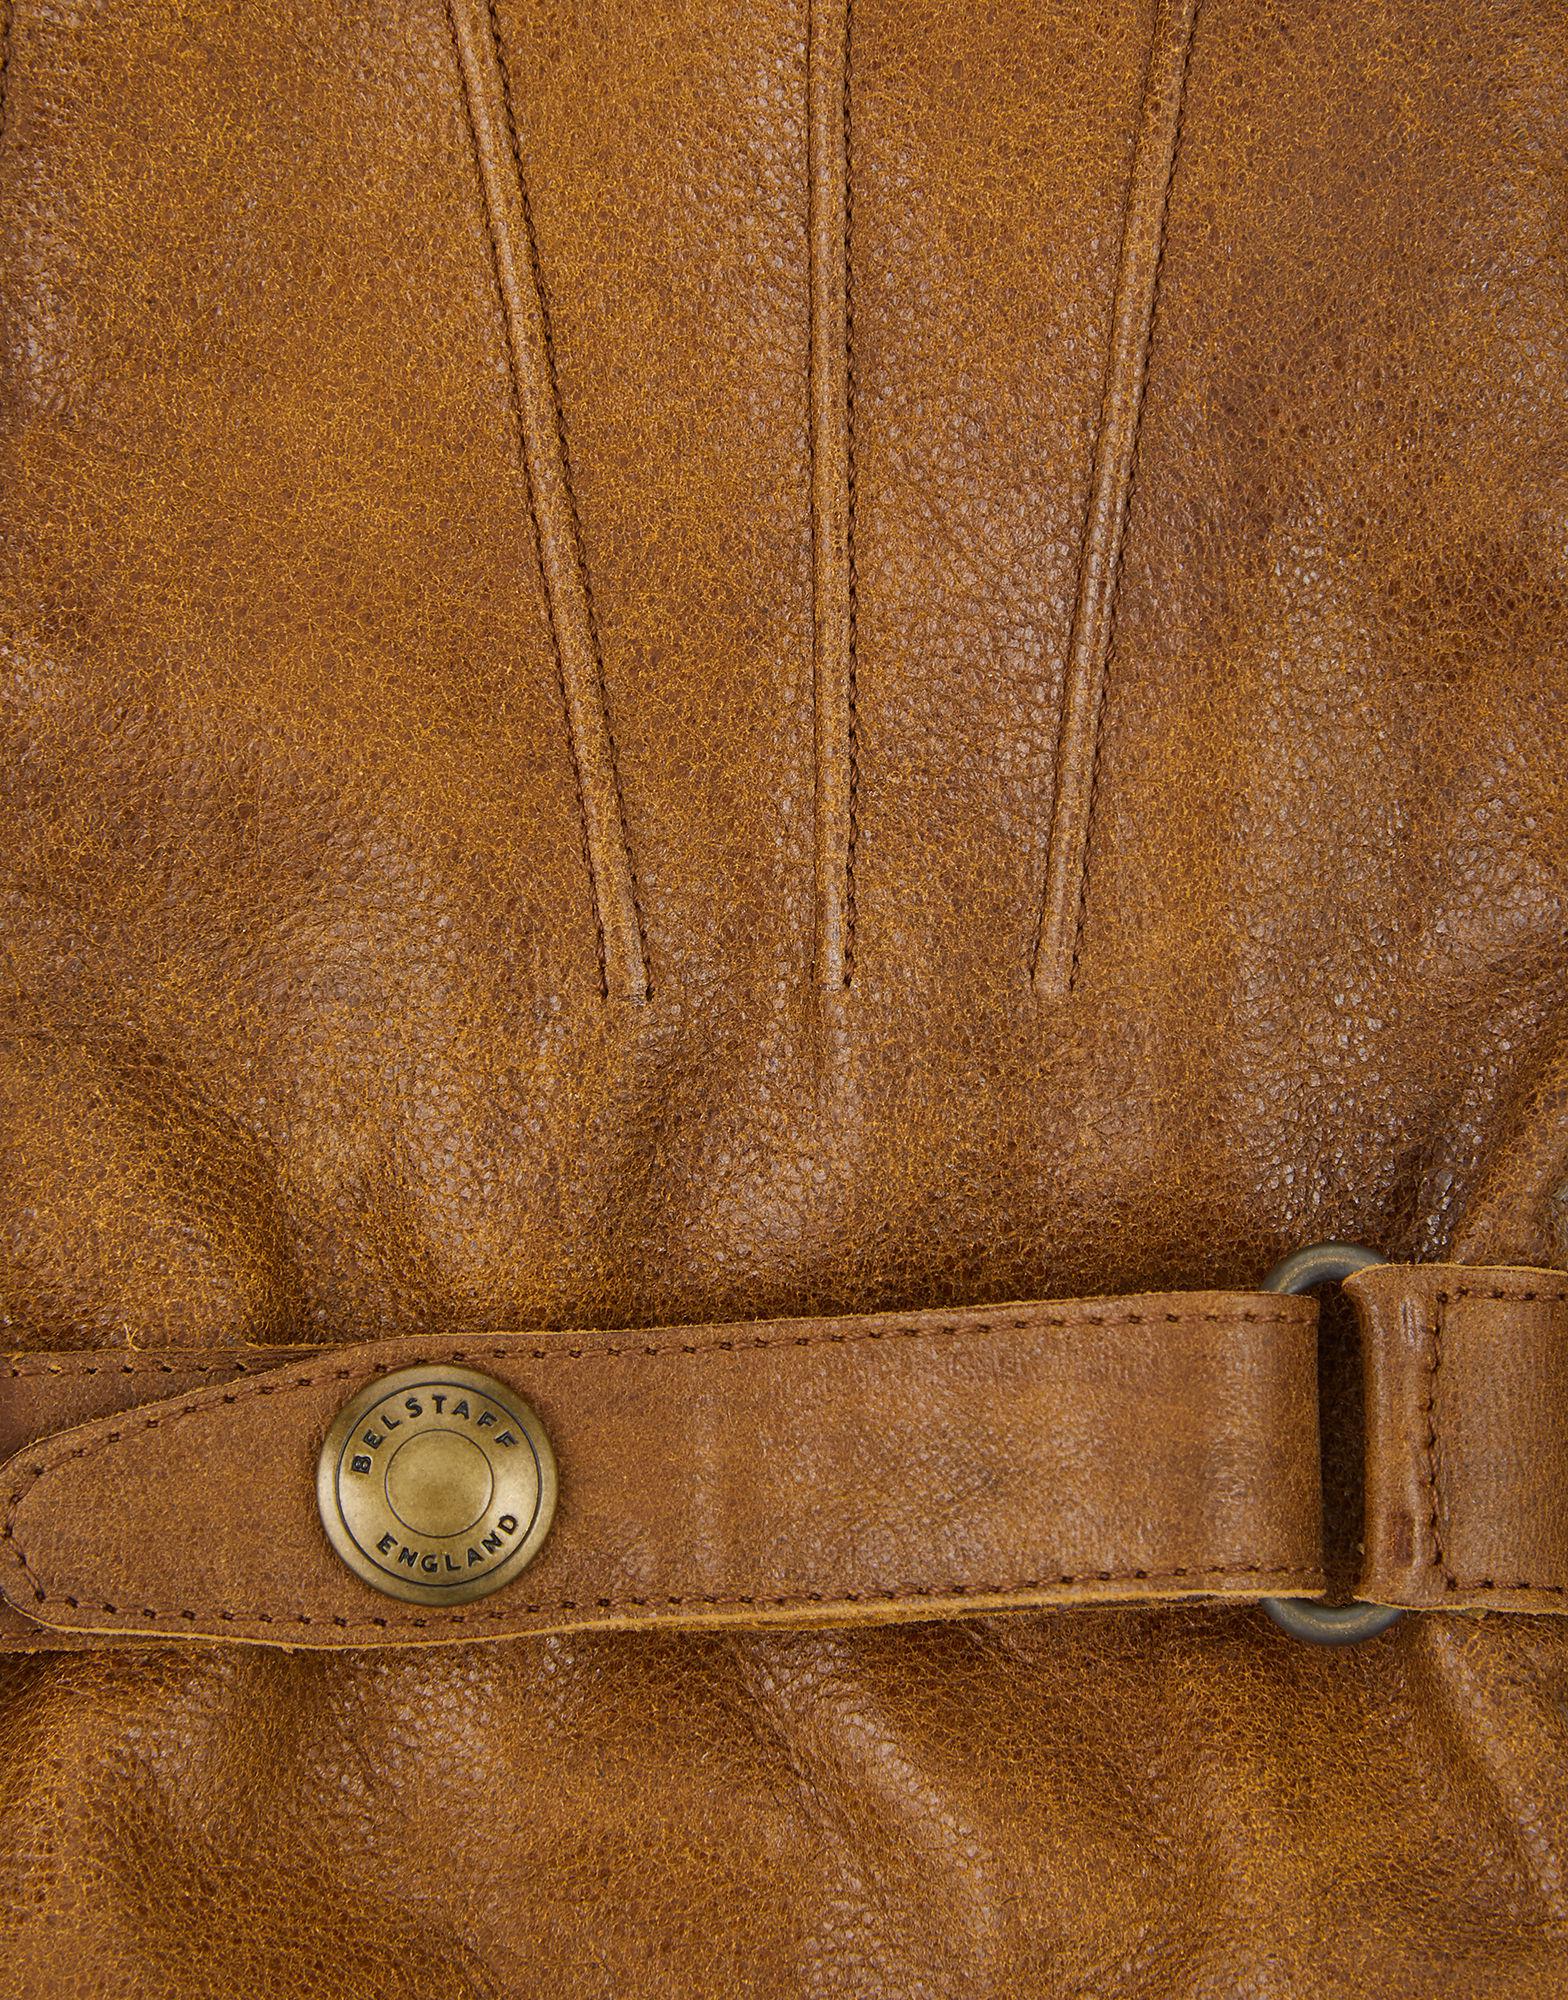 Belstaff Leather Heyford Gloves in Cognac (Brown) for Men - Lyst